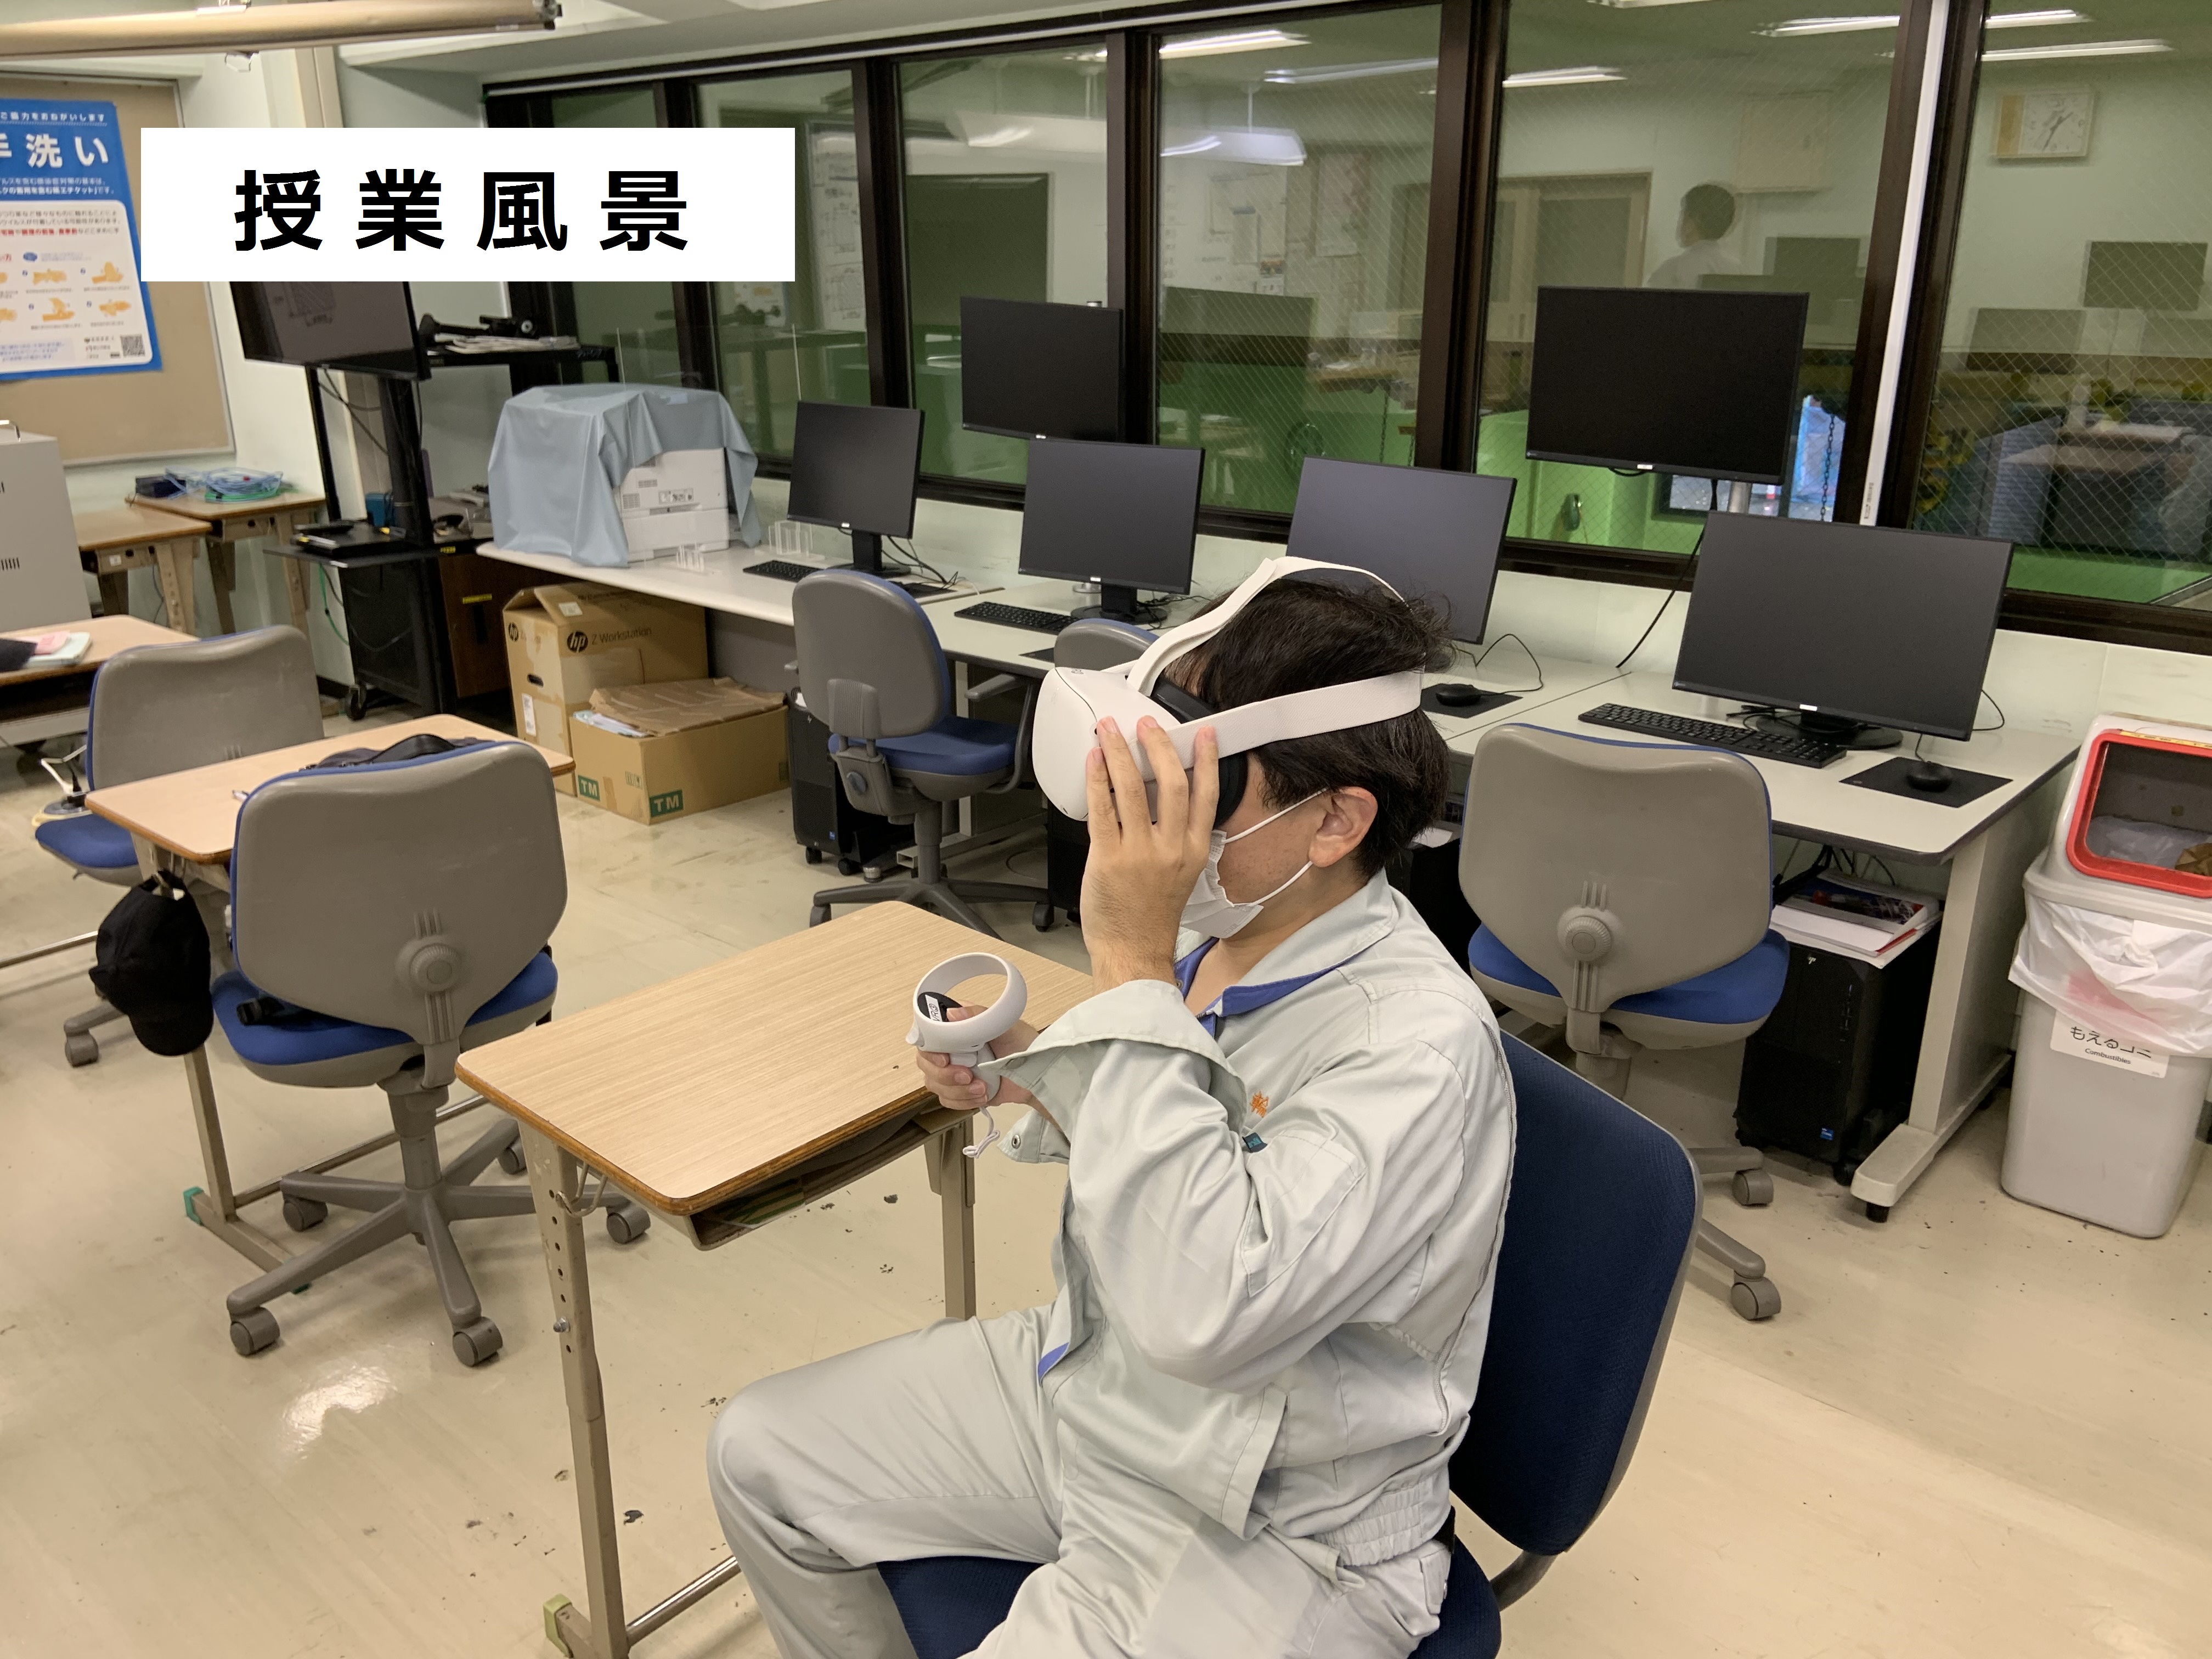 VR機器を使った授業風景